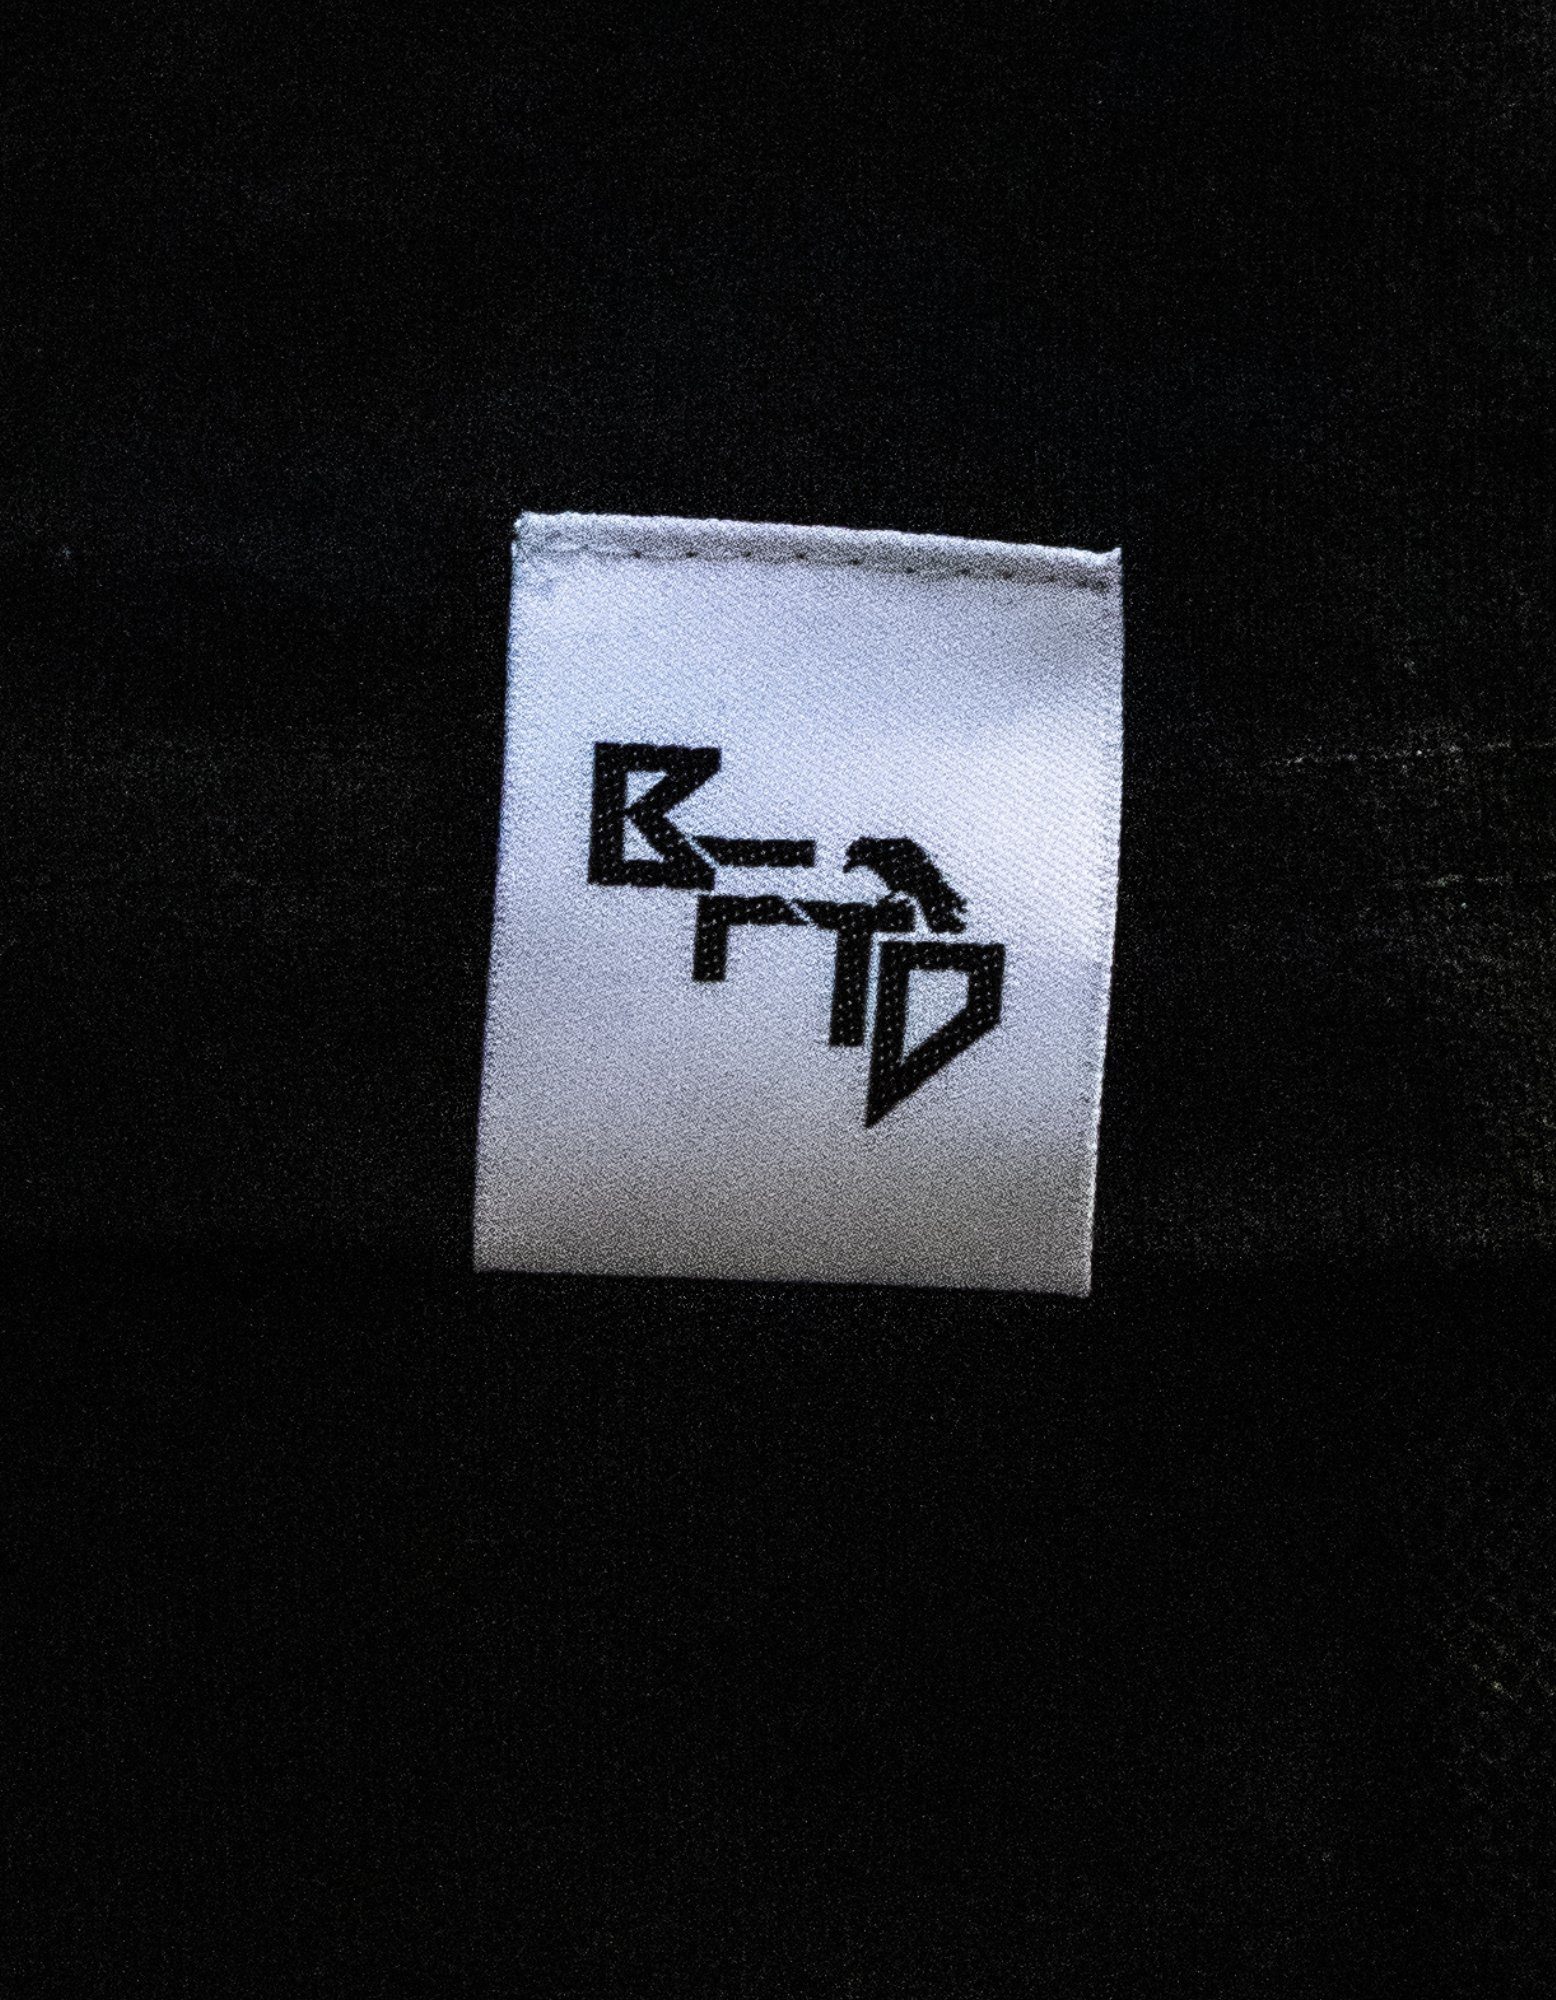 BFTD-Clothing Stick Baumwolle, Oversize Bedruckt + Falling BFTD Inside Shirt T-Shirt 100%